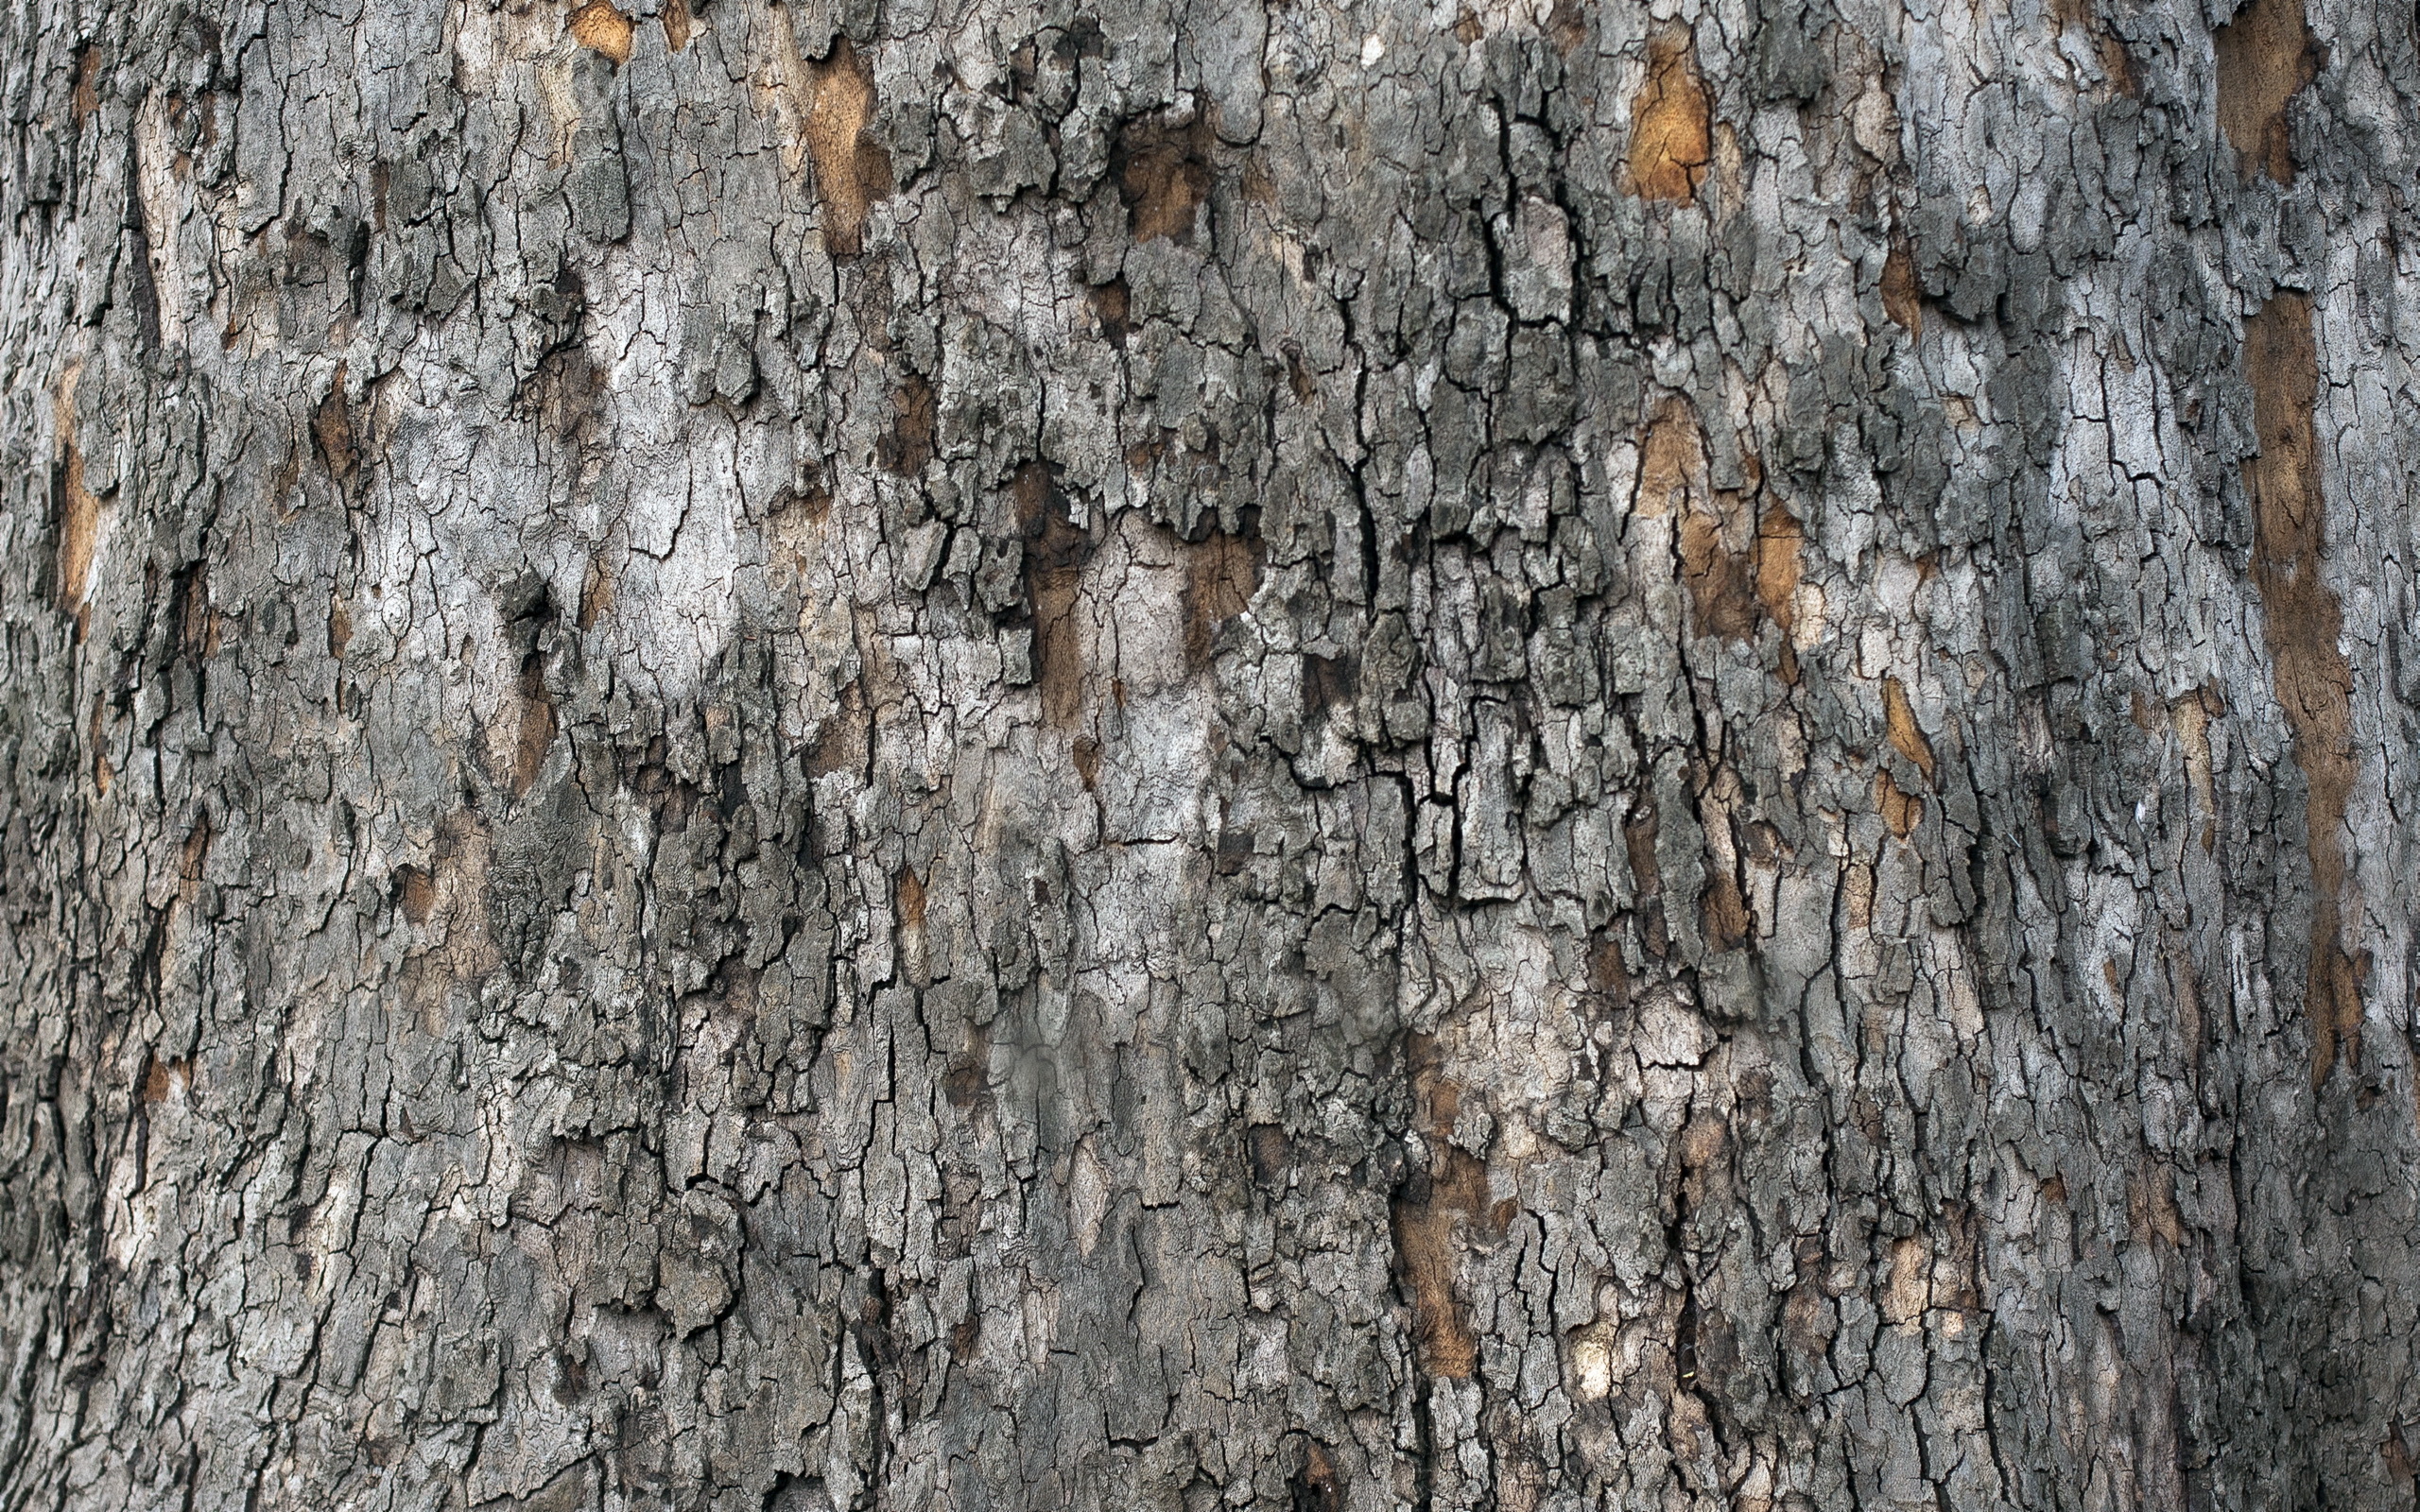 Tree Bark Texture Wallpaper Photos Pictures